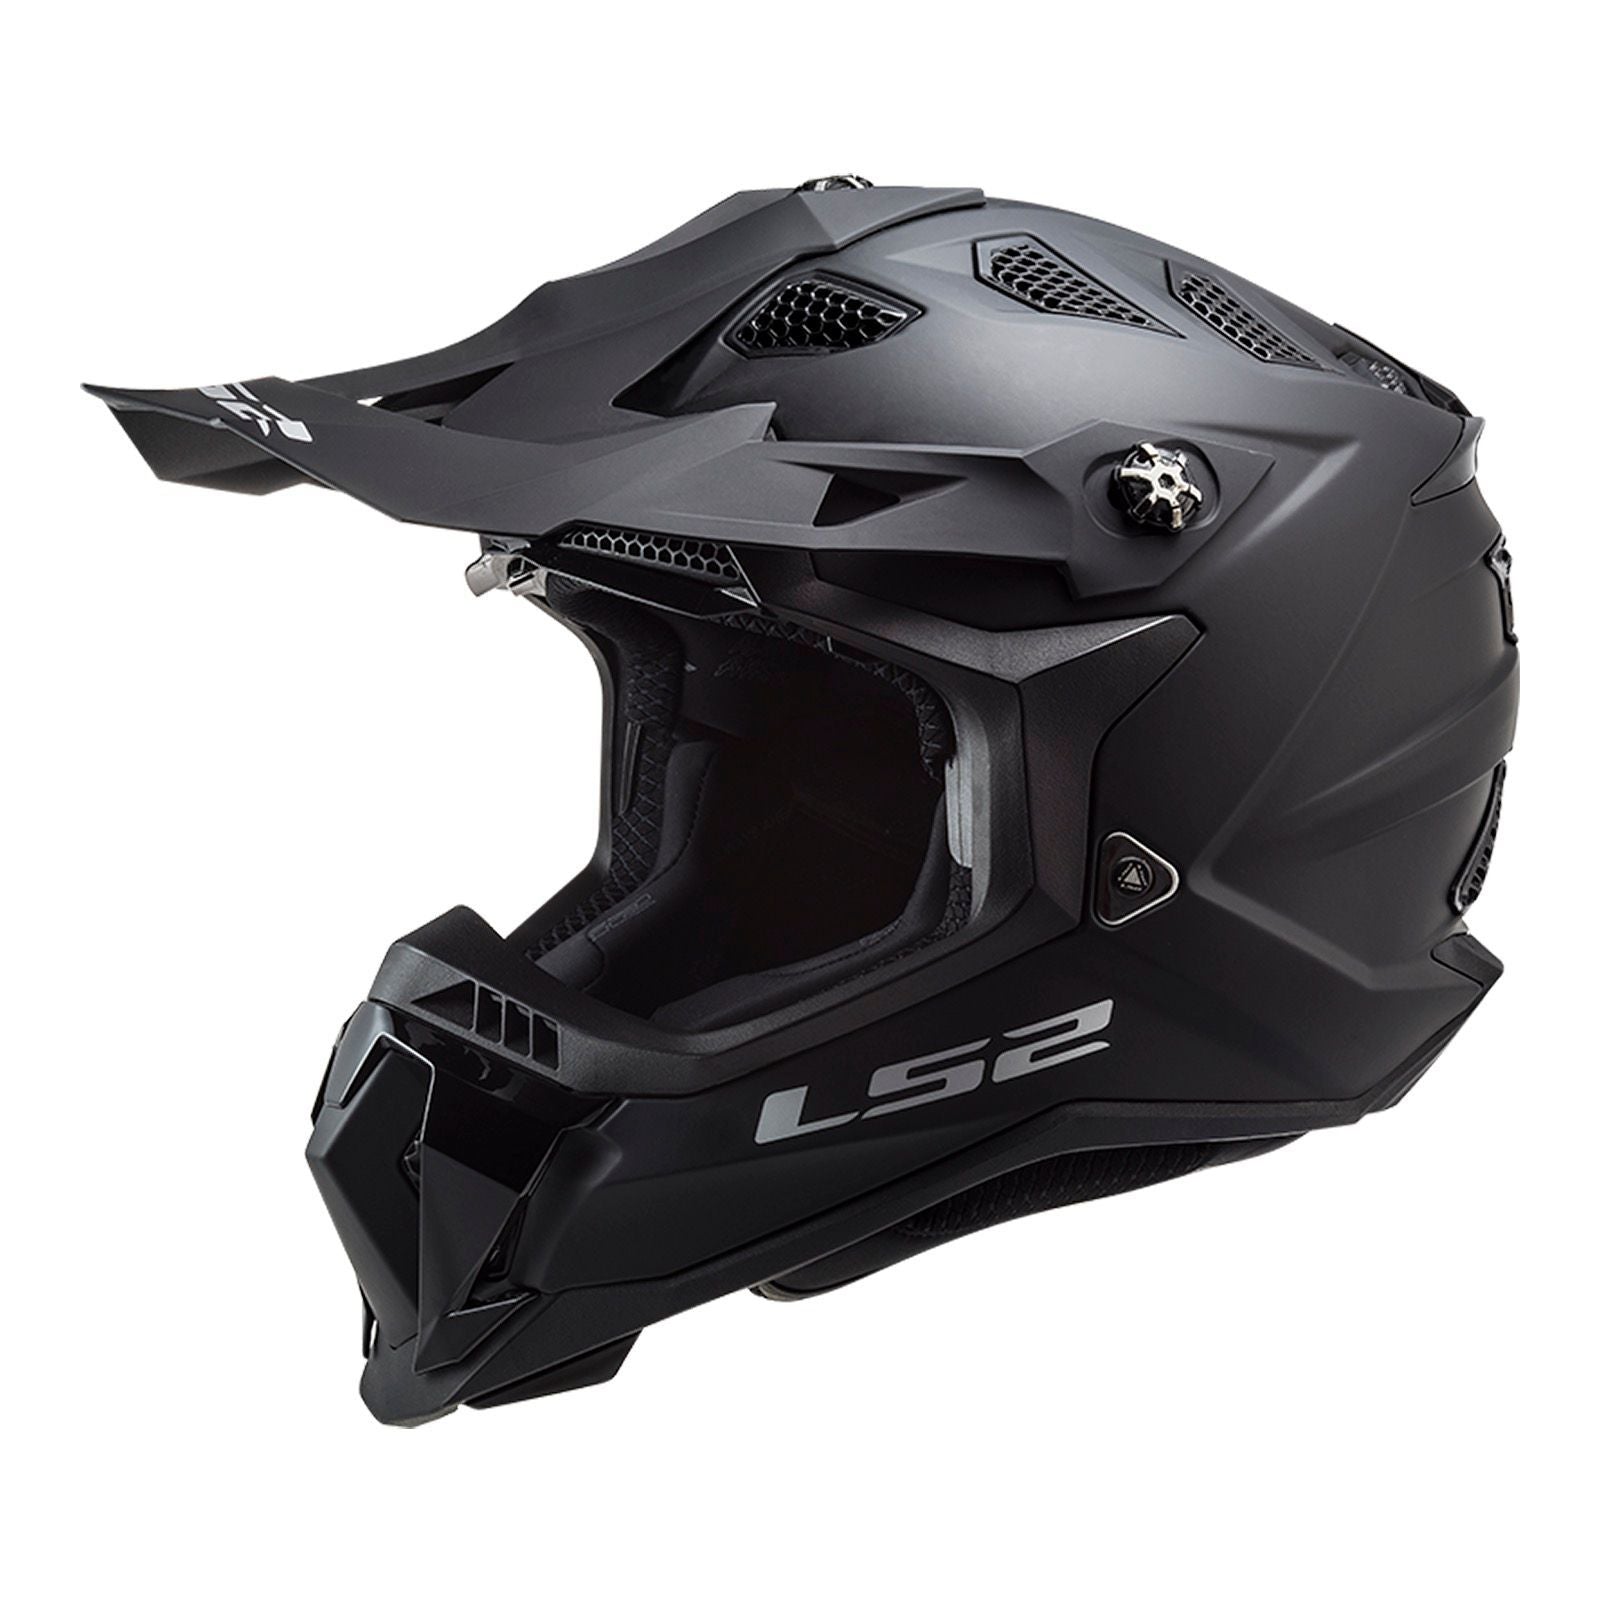 New LS2 MX700 Subverter EVO Noir Helmet - Matte Black (XS) #LS2MX700SOLMBXS